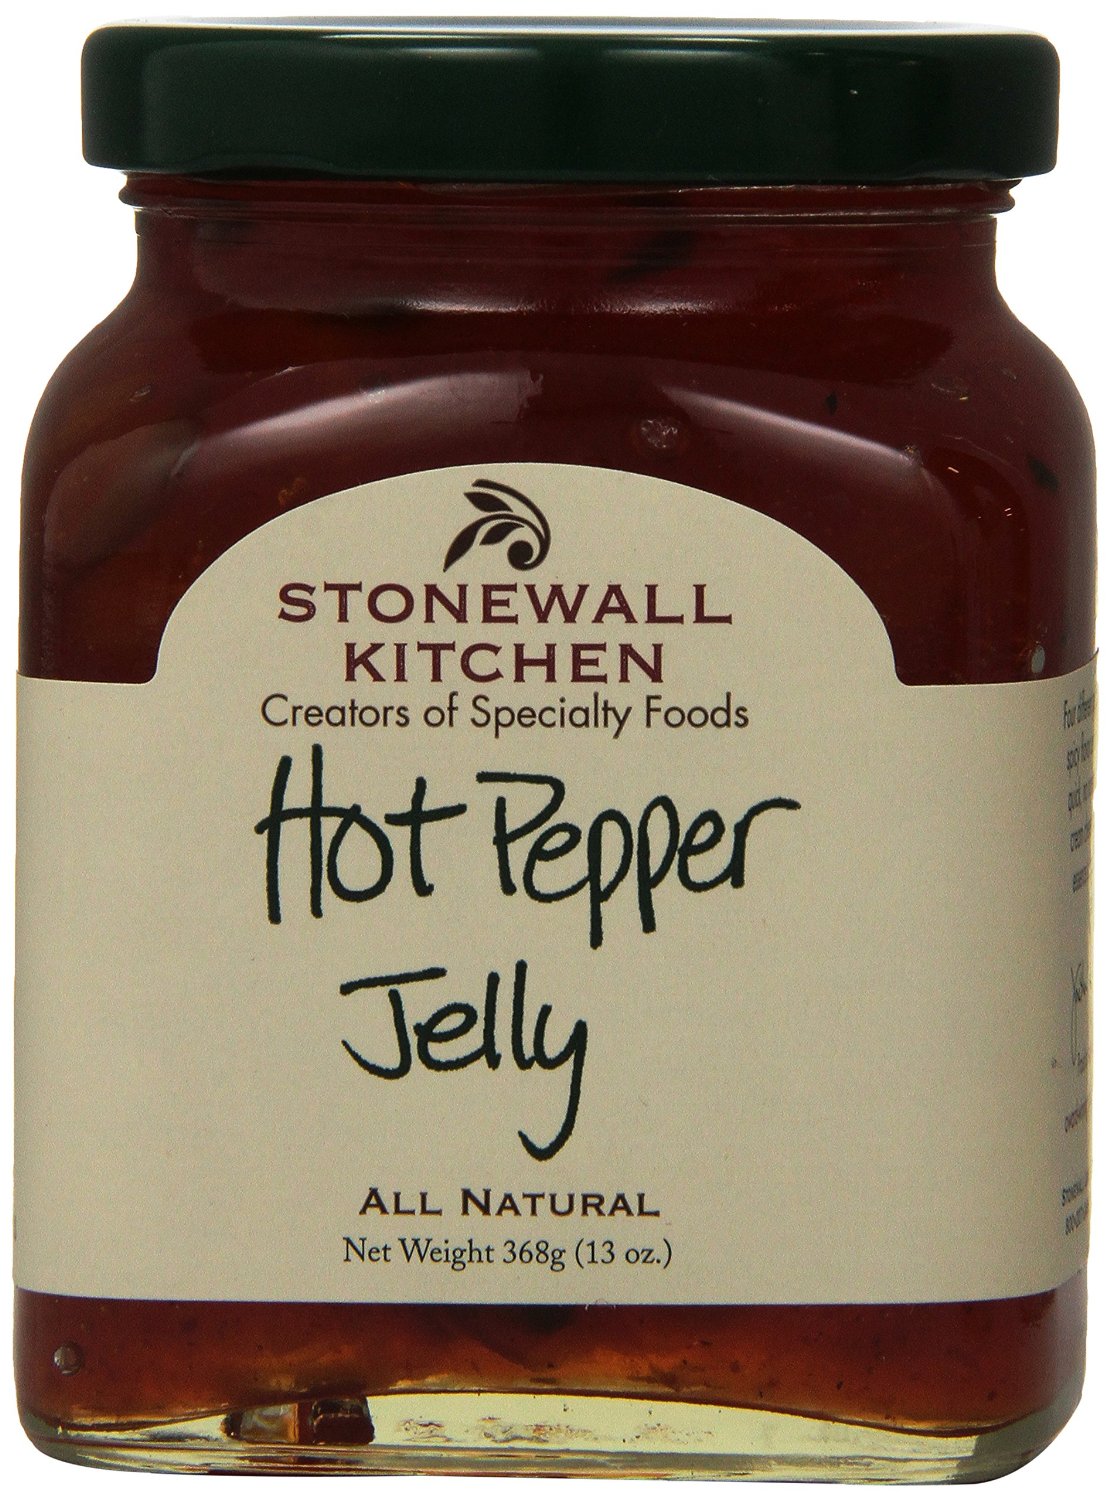 Stonewall Kitchen Hot Pepper Jelly, 13 oz.